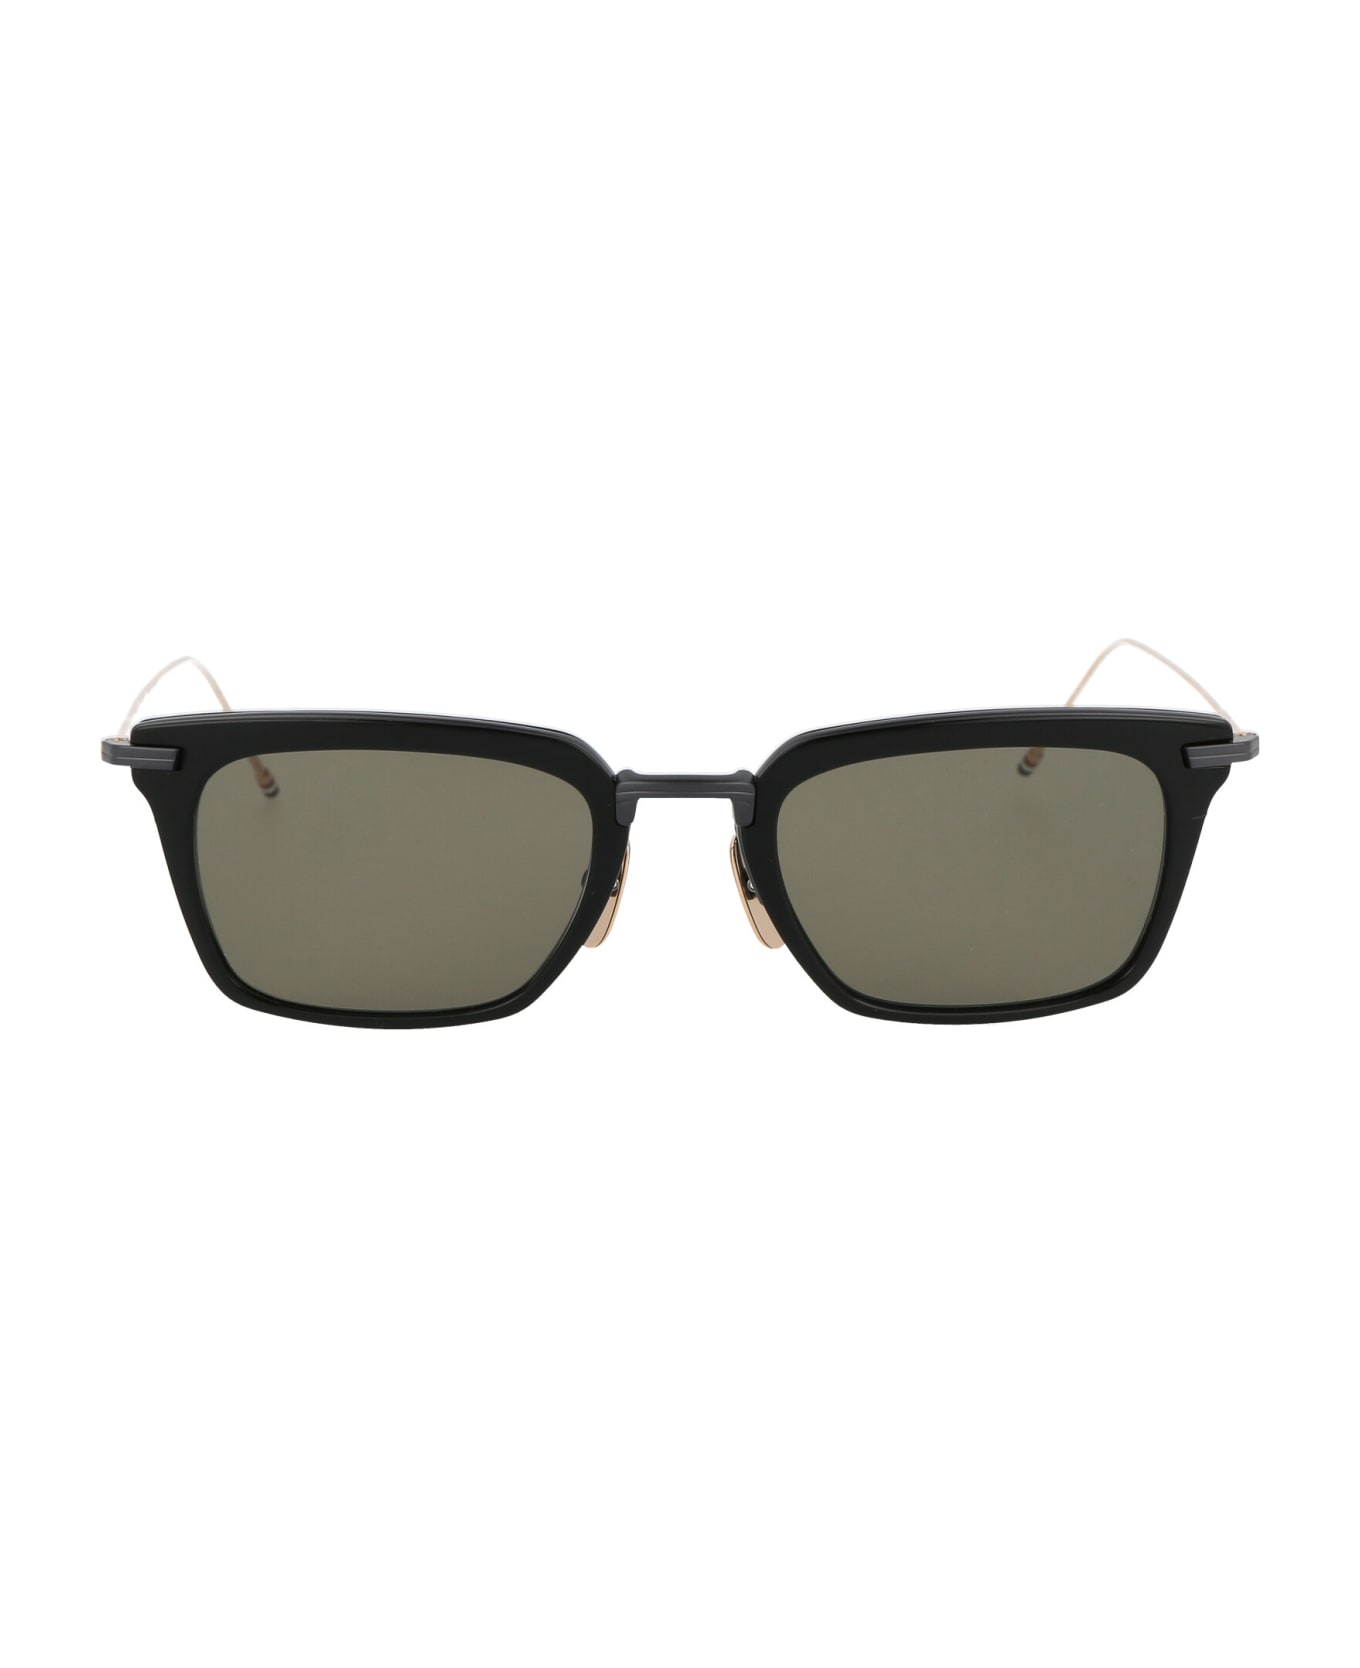 Thom Browne Tb-916 Sunglasses - 01 BLACK - BLACK IRON - WHITE GOLD TEMPLES W/ G-15